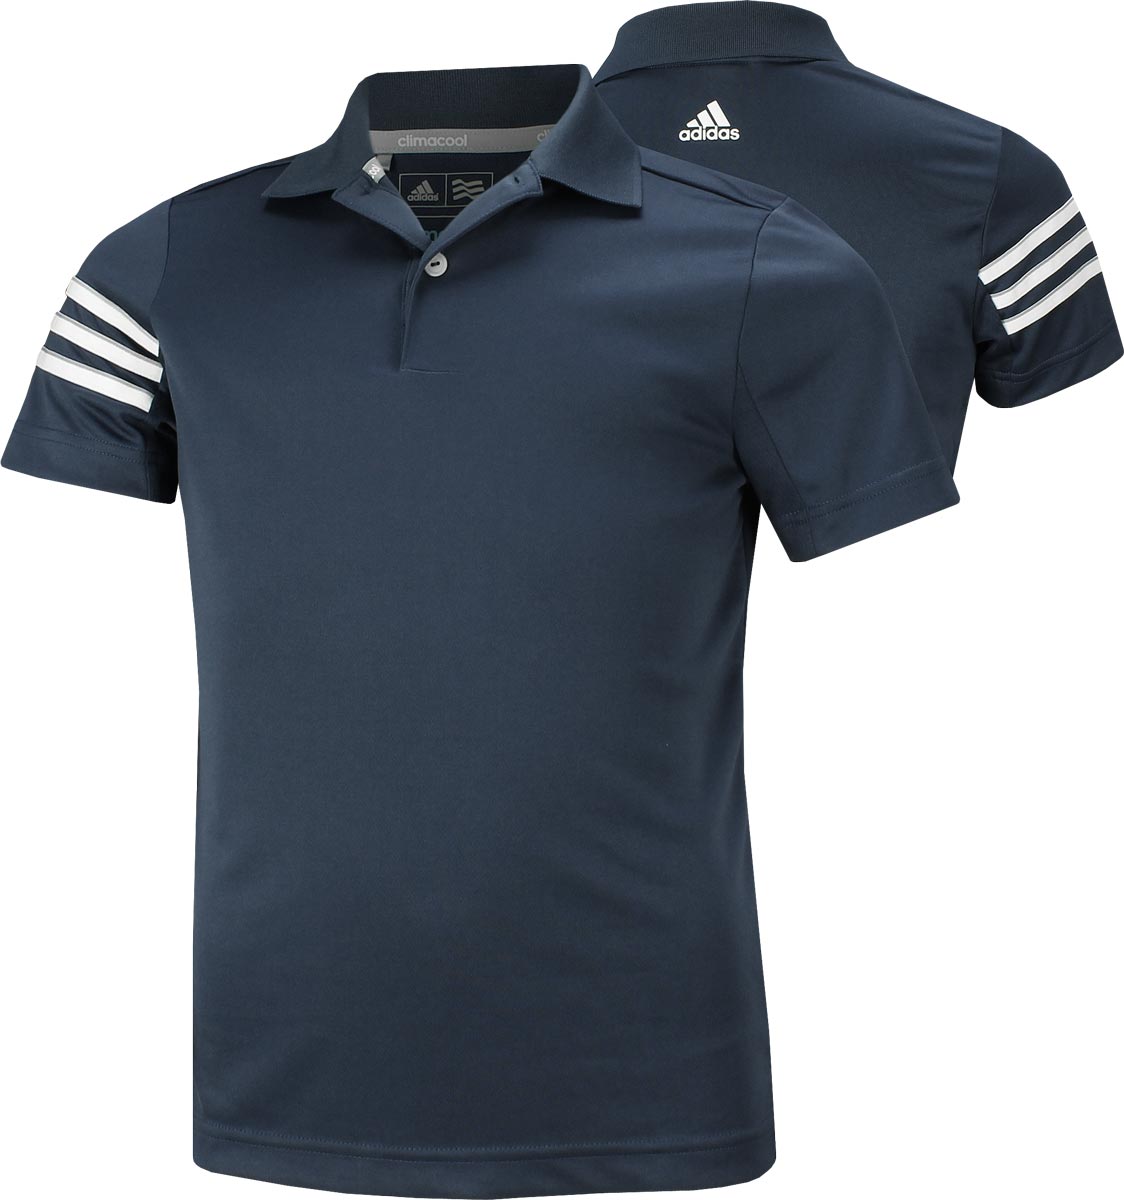 Adidas ClimaCool 3-Stripes Junior Golf Shirts - ON SALE